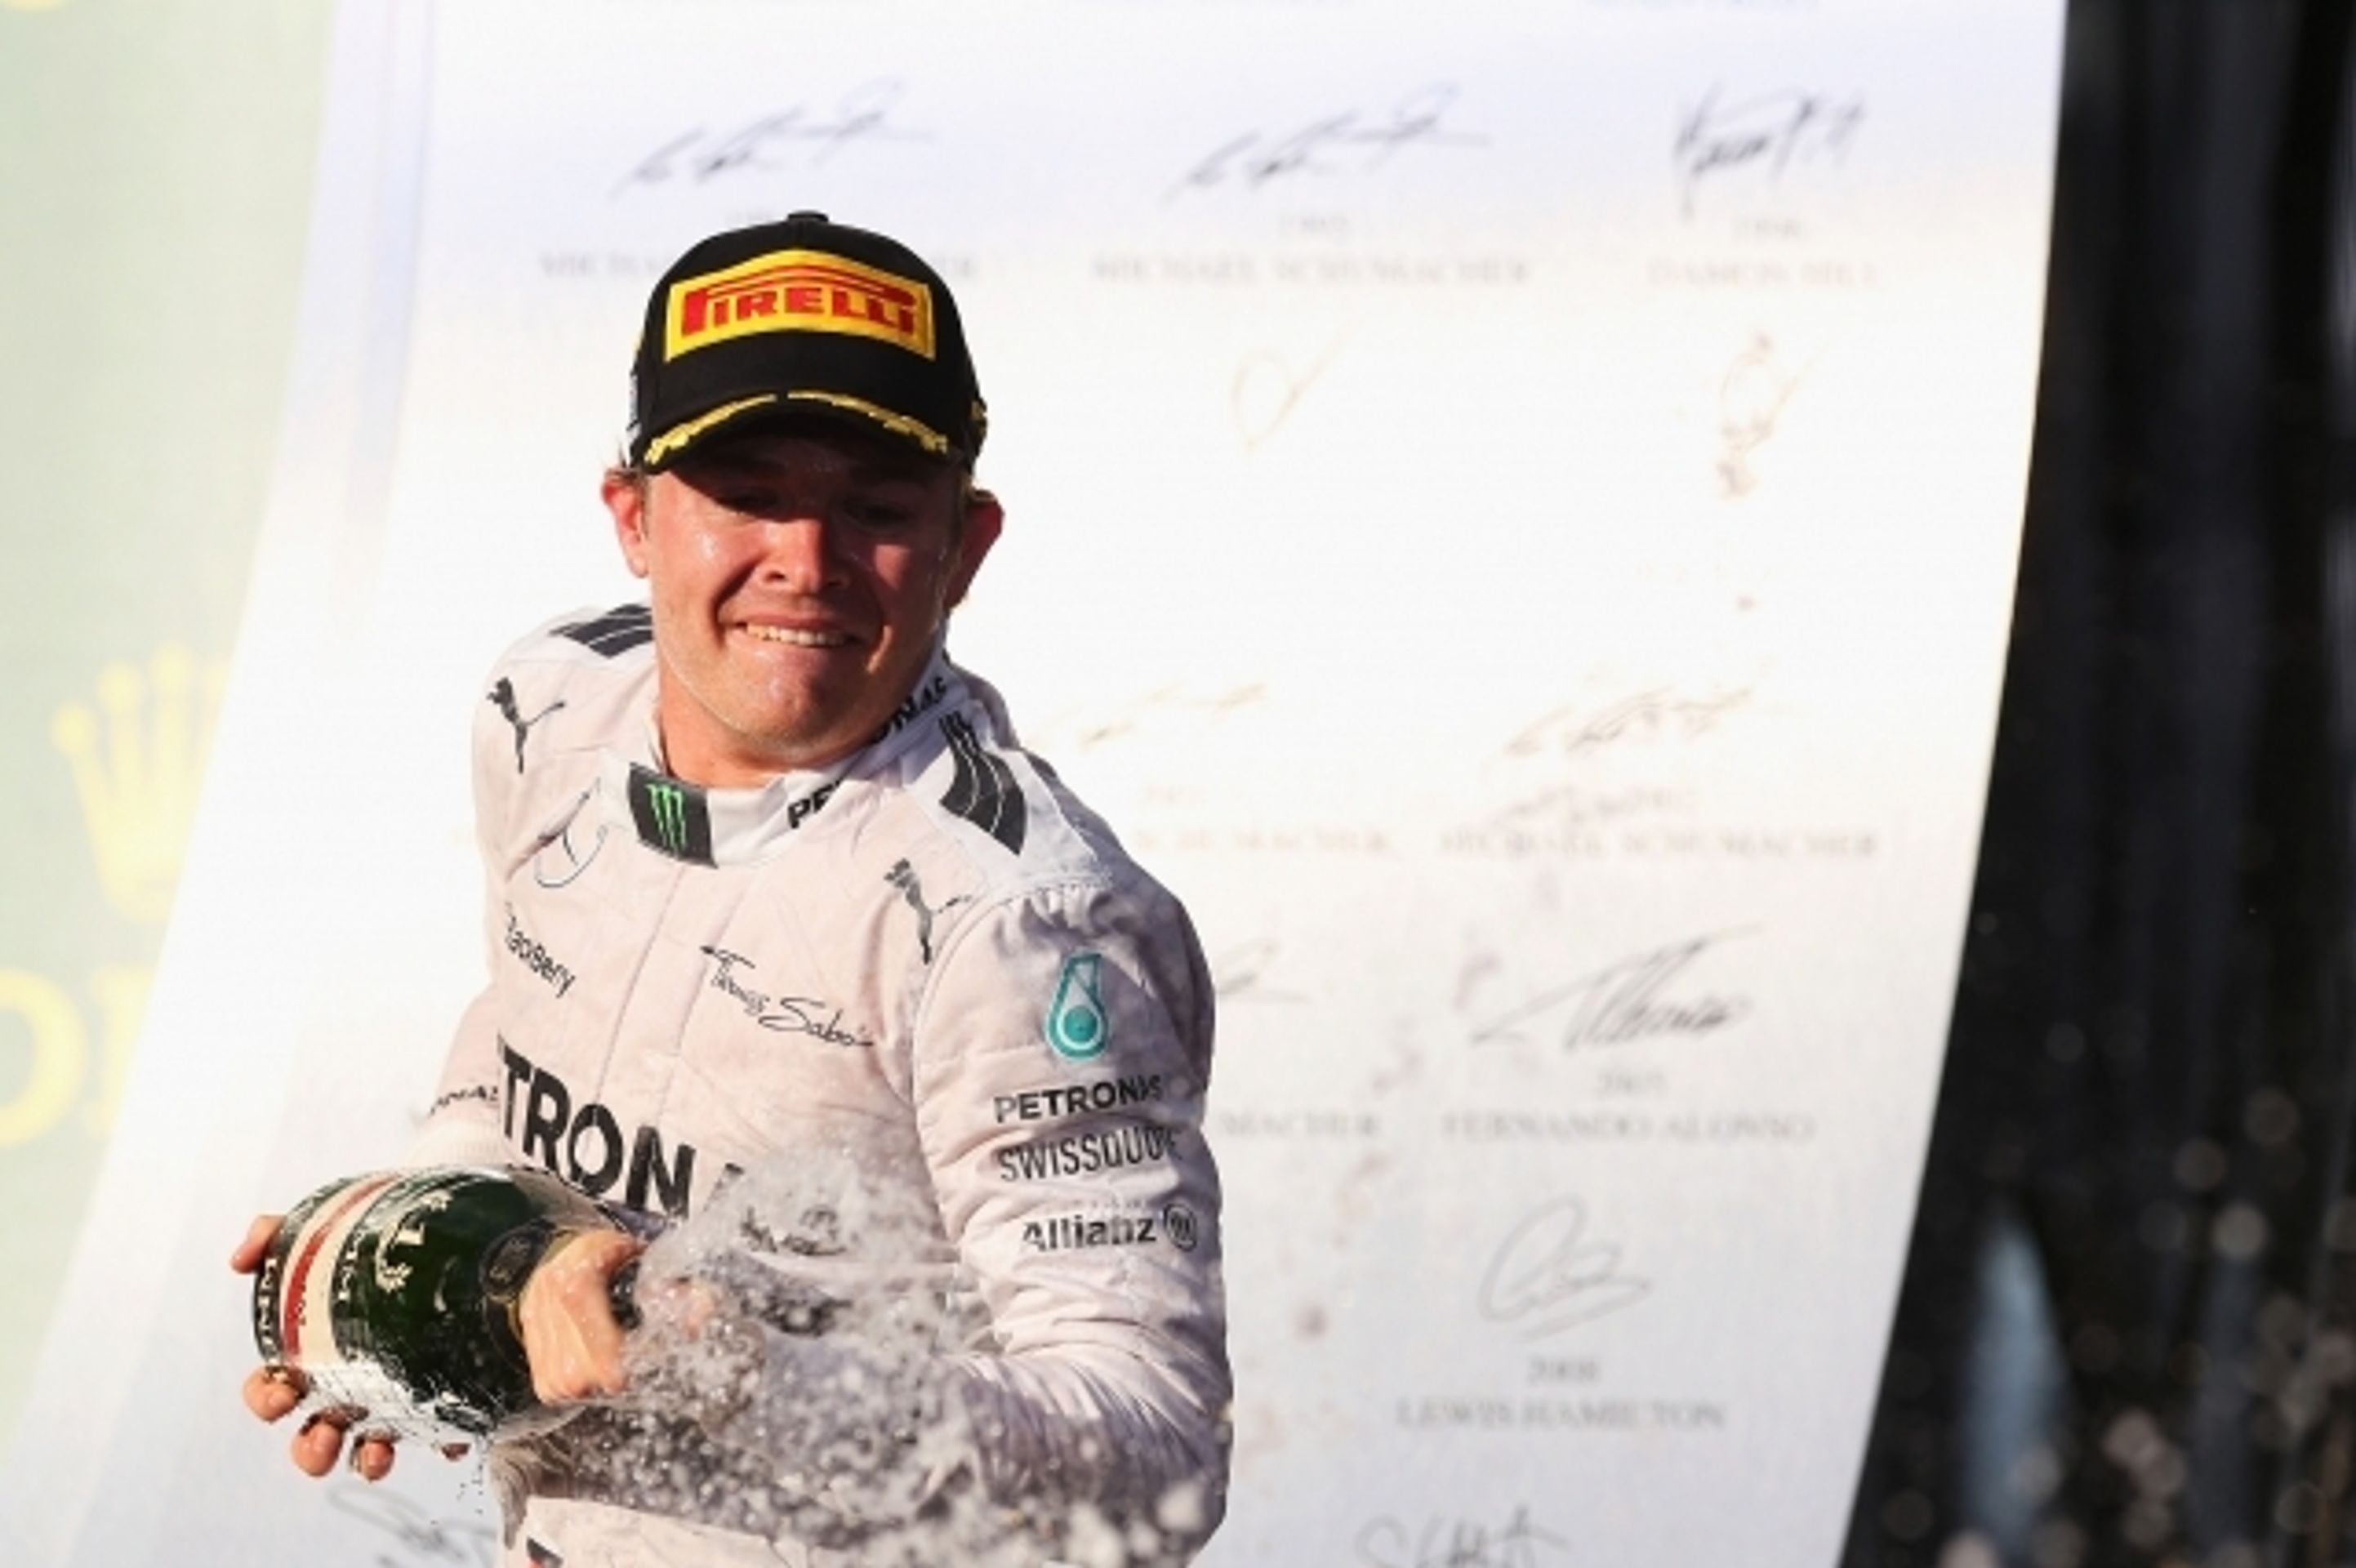 Velká cena Austrálie, Rosberg, Ricciardo, Magnussen - 1 - GALERIE: Rosberg ovládl Velkou cenu Austrálie, domácí Ricciardo byl druhý (10/10)